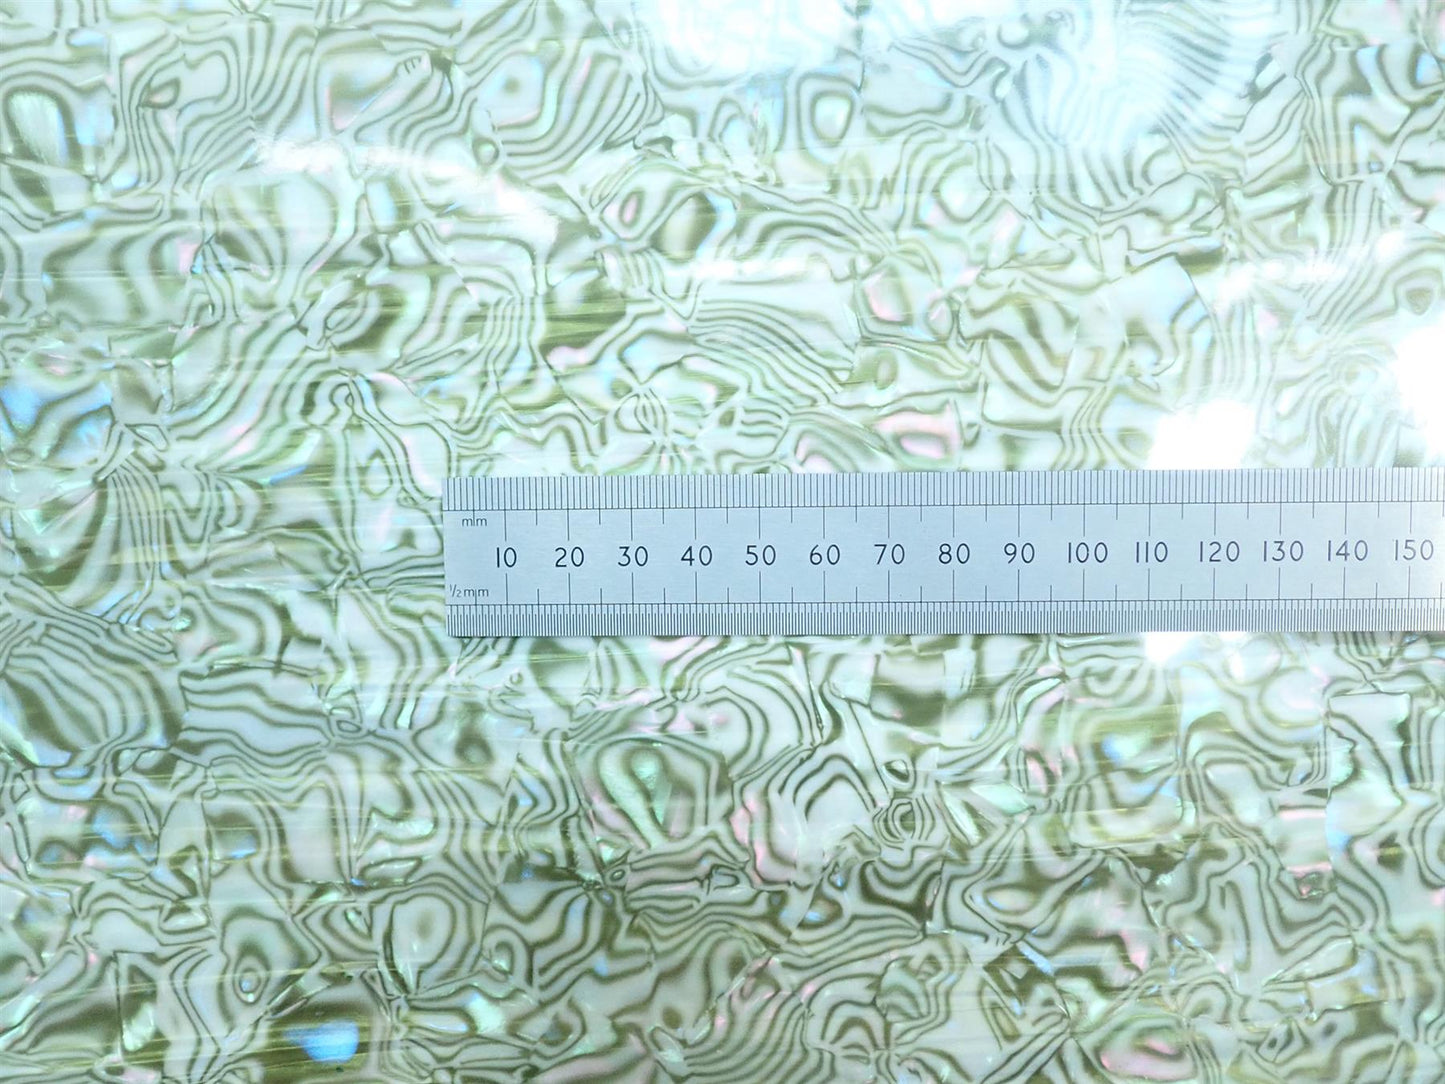 Incudo Light Green Tiger Shell Celluloid Veneer / Wrap - 1600x700x0.17mm (63x27.56x0.007")